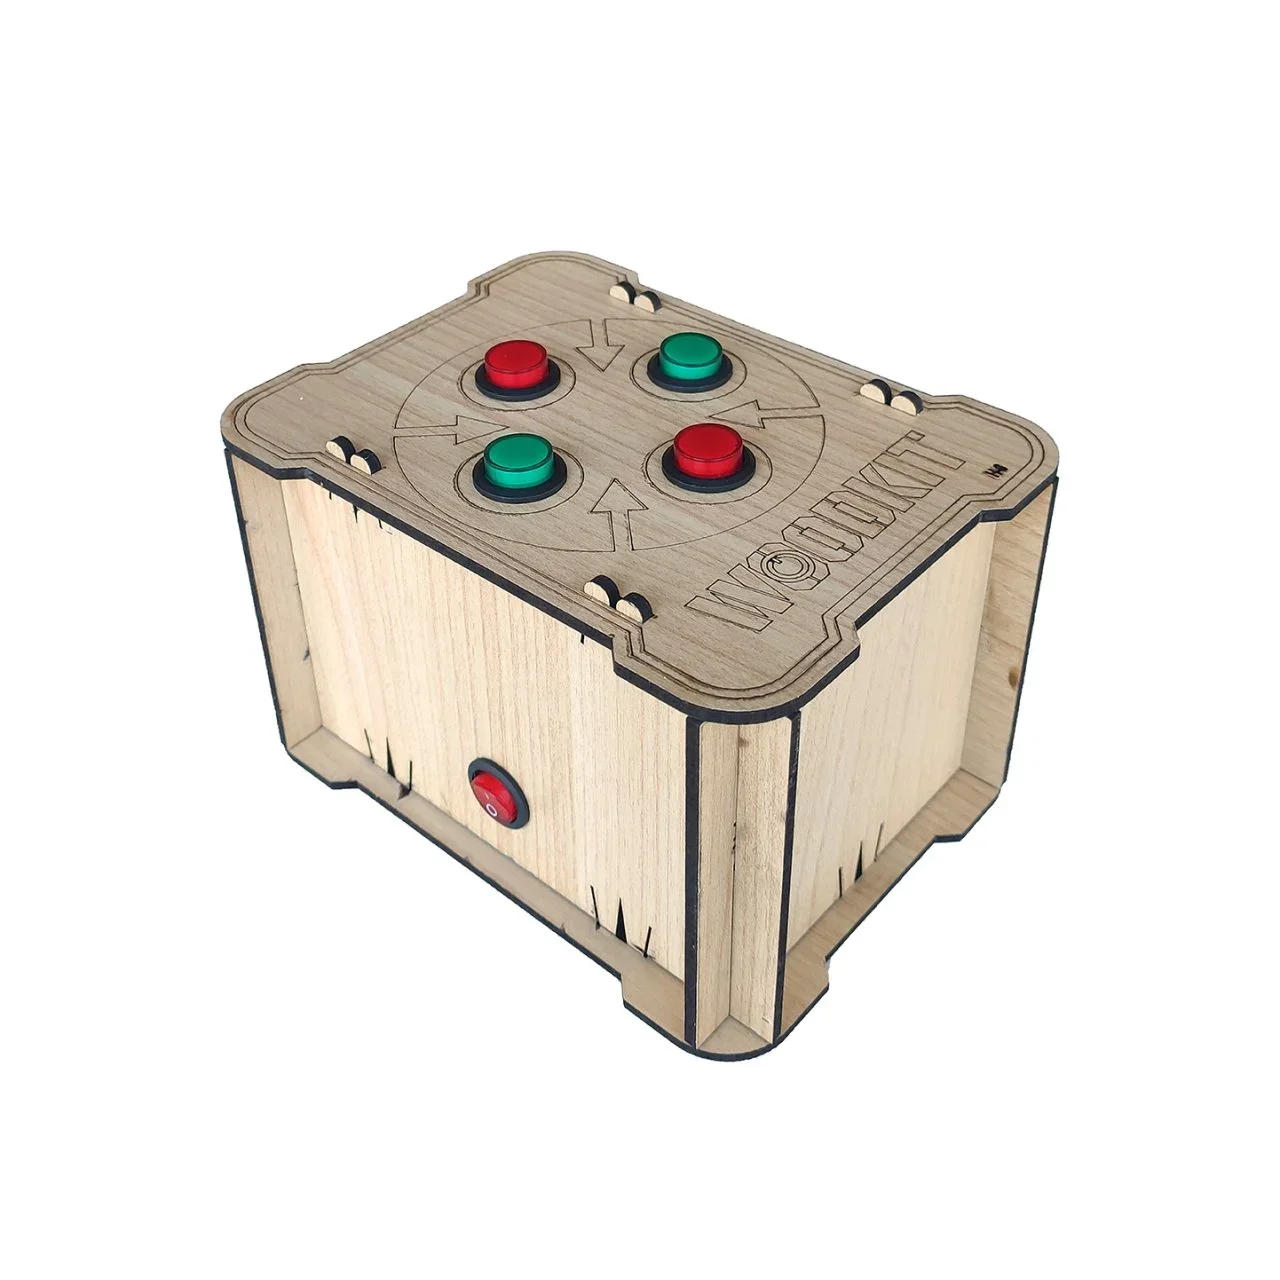 Wood-Kit Robotic Coding kit - Color Memory Game